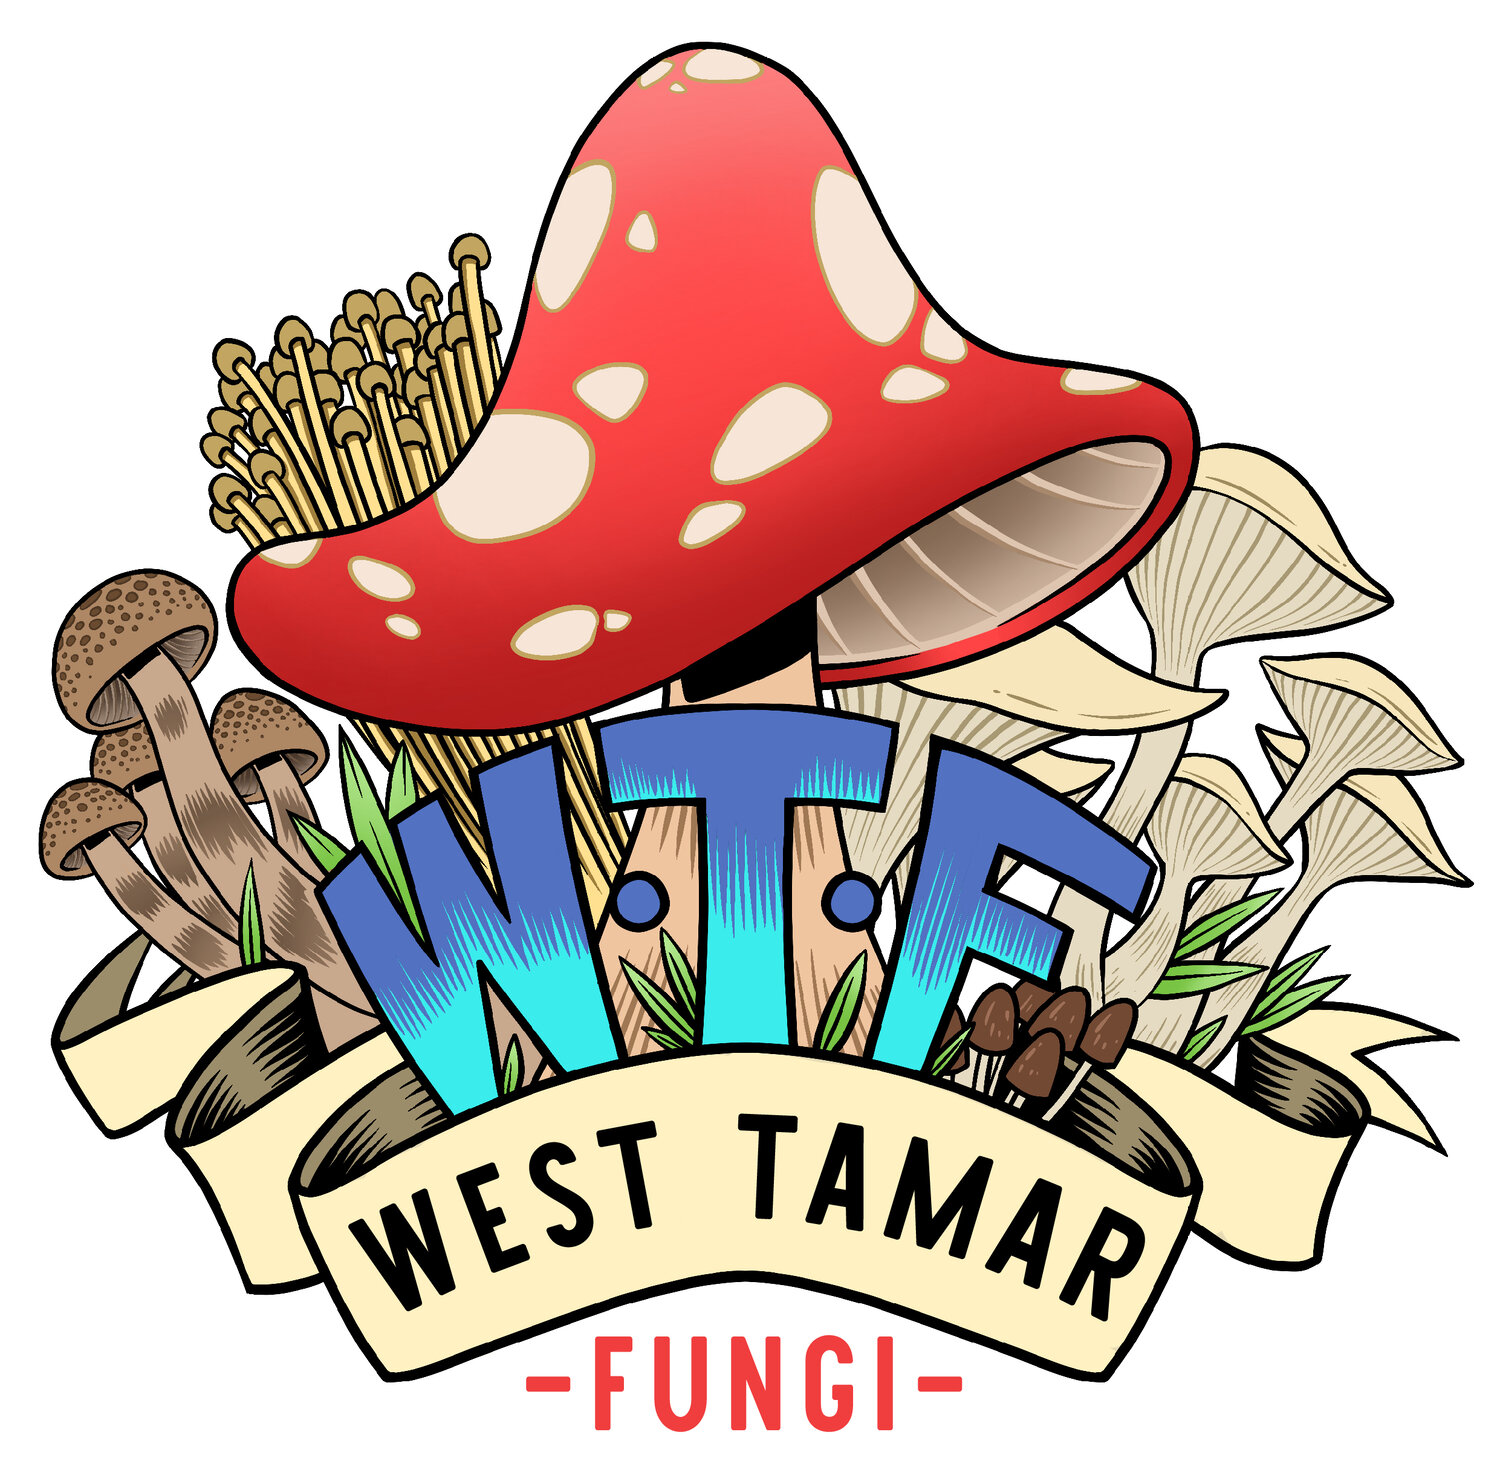 West Tamar Fungi 